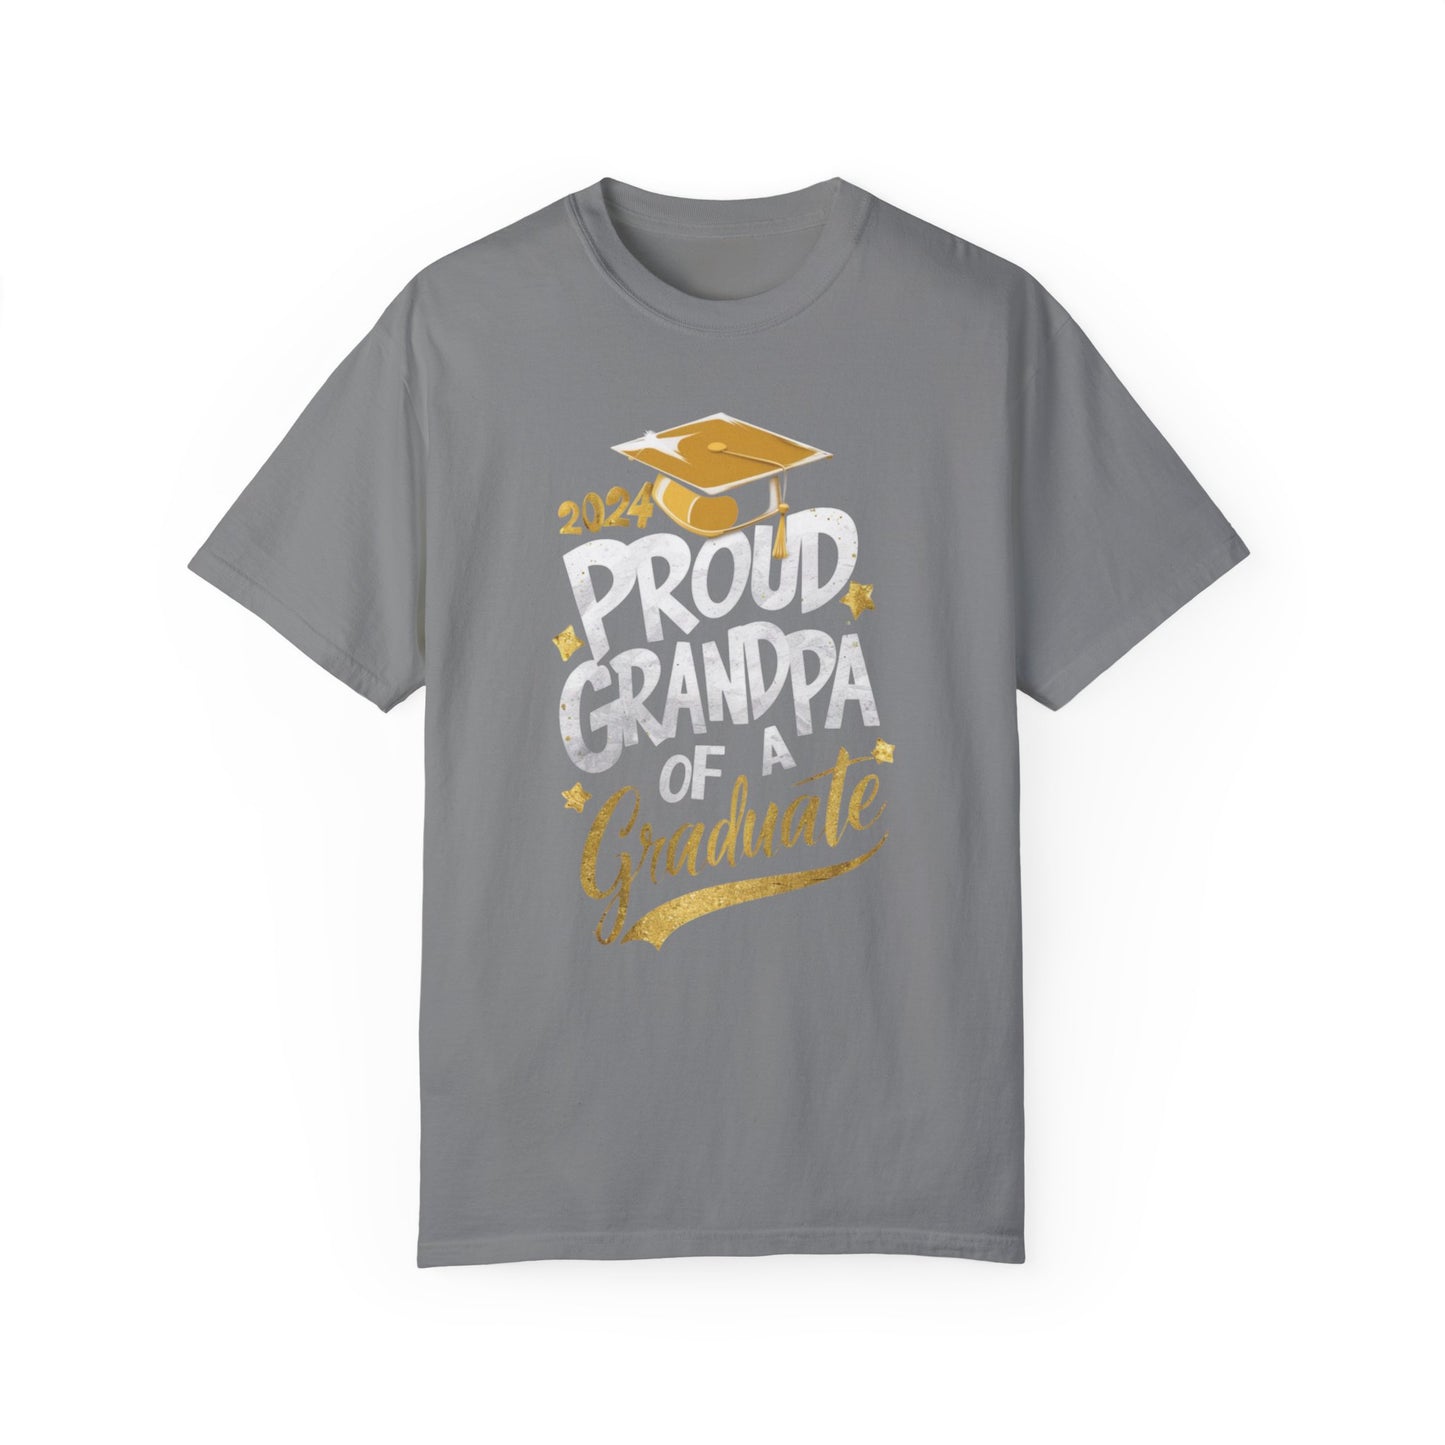 Proud Grandpa of a 2024 Graduate Unisex Garment-dyed T-shirt Cotton Funny Humorous Graphic Soft Premium Unisex Men Women Grey T-shirt Birthday Gift-9